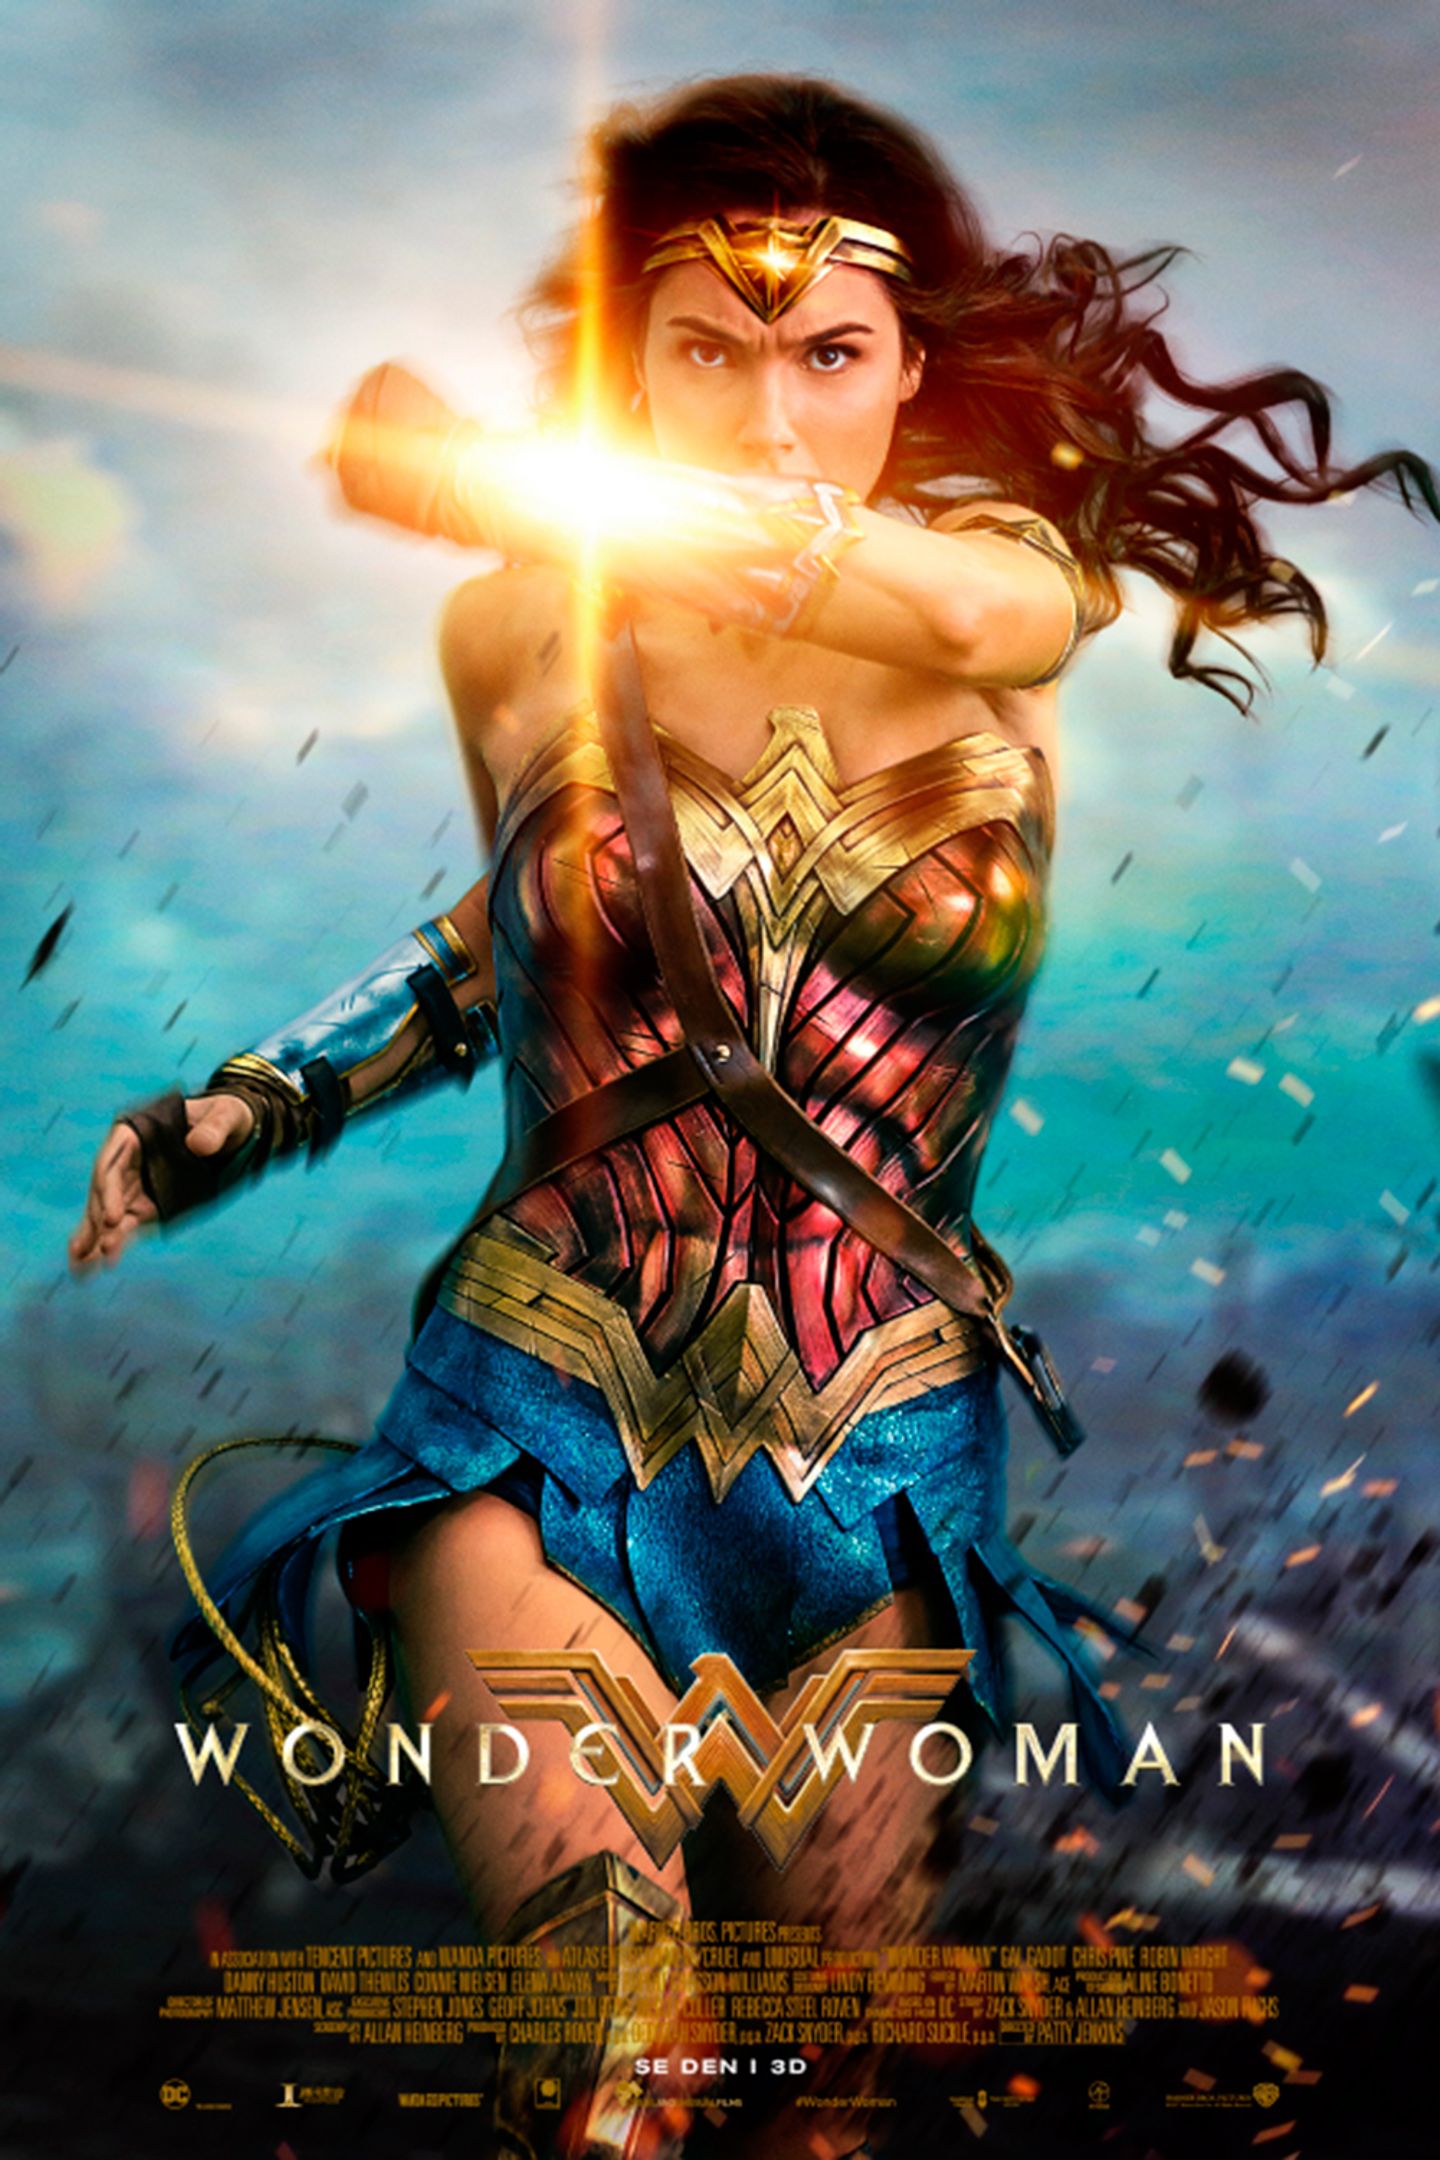 Plakat for 'Wonder Woman'